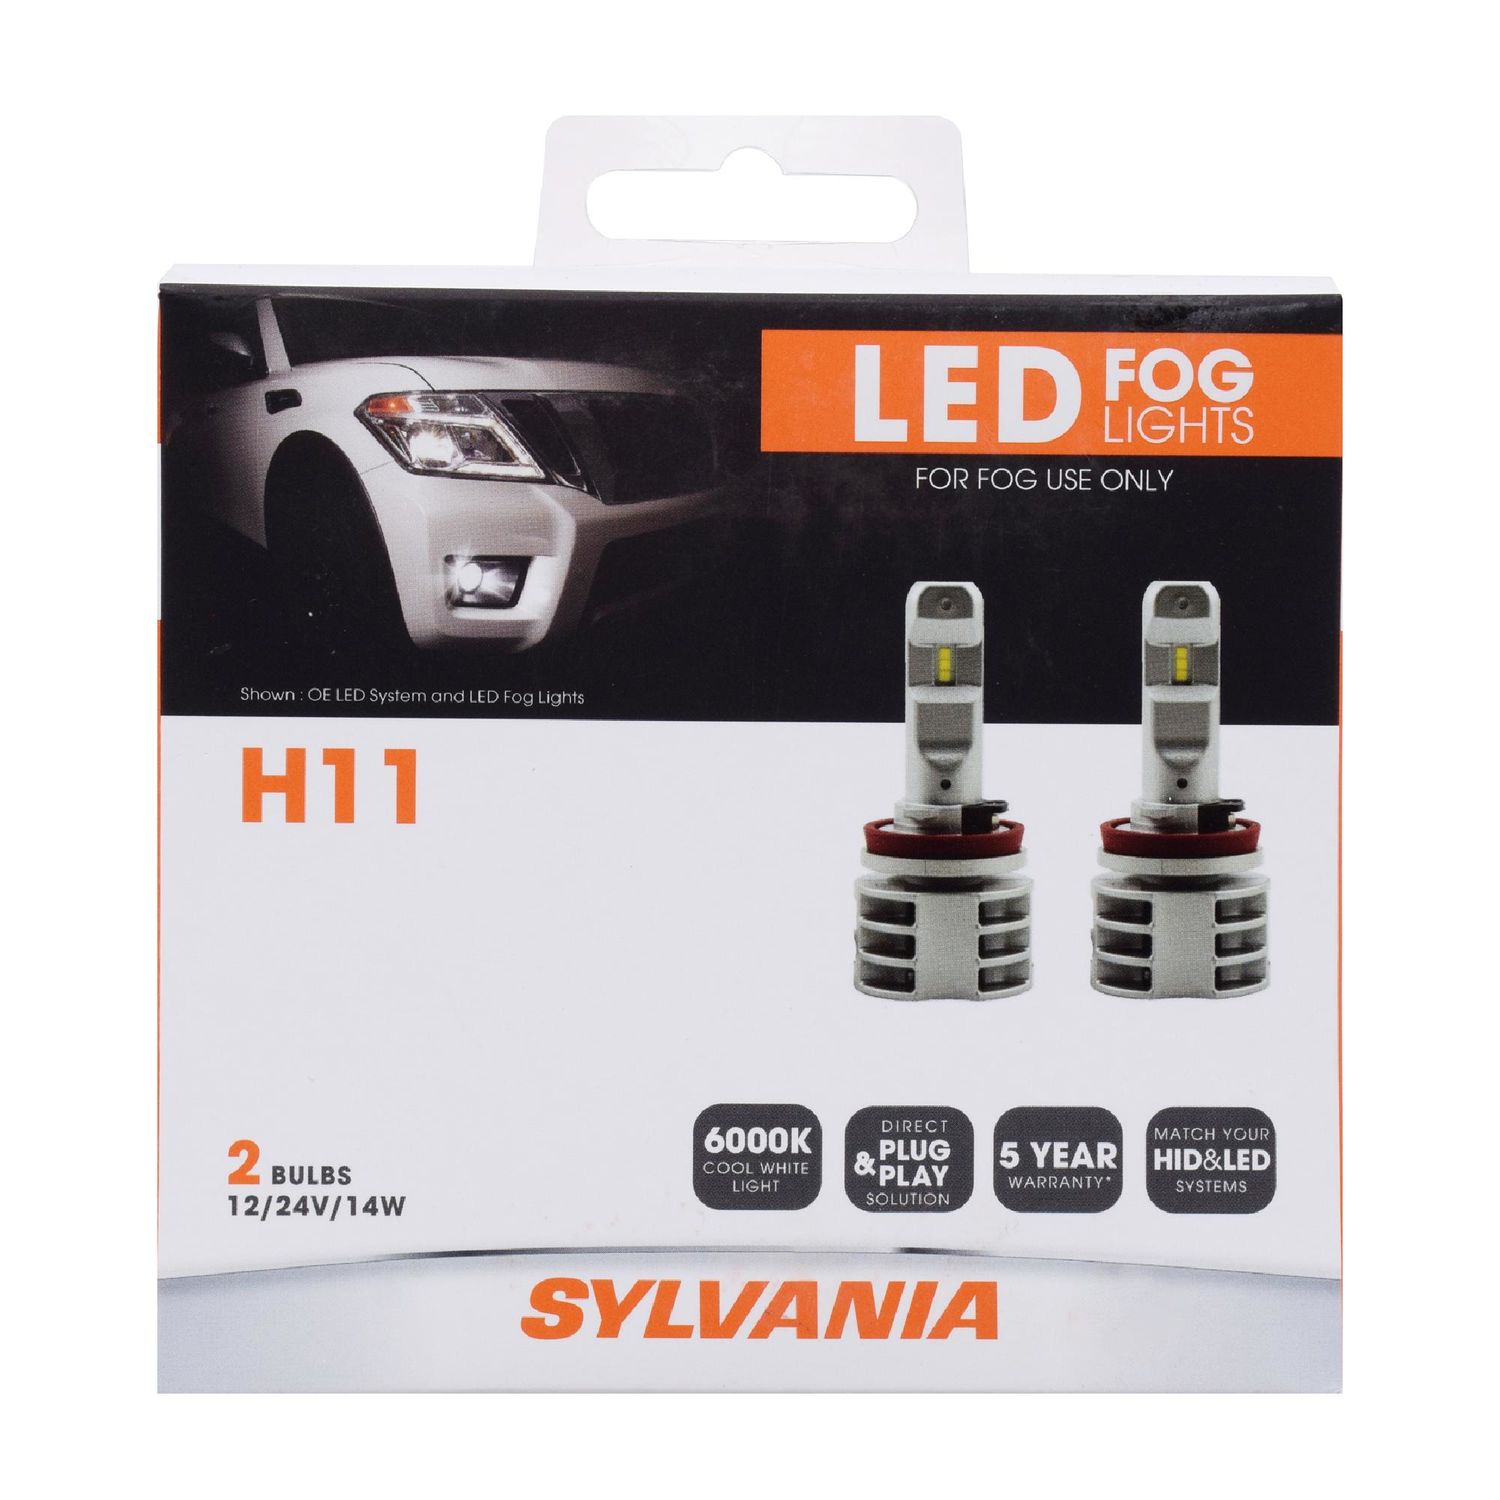 led headlight wattage